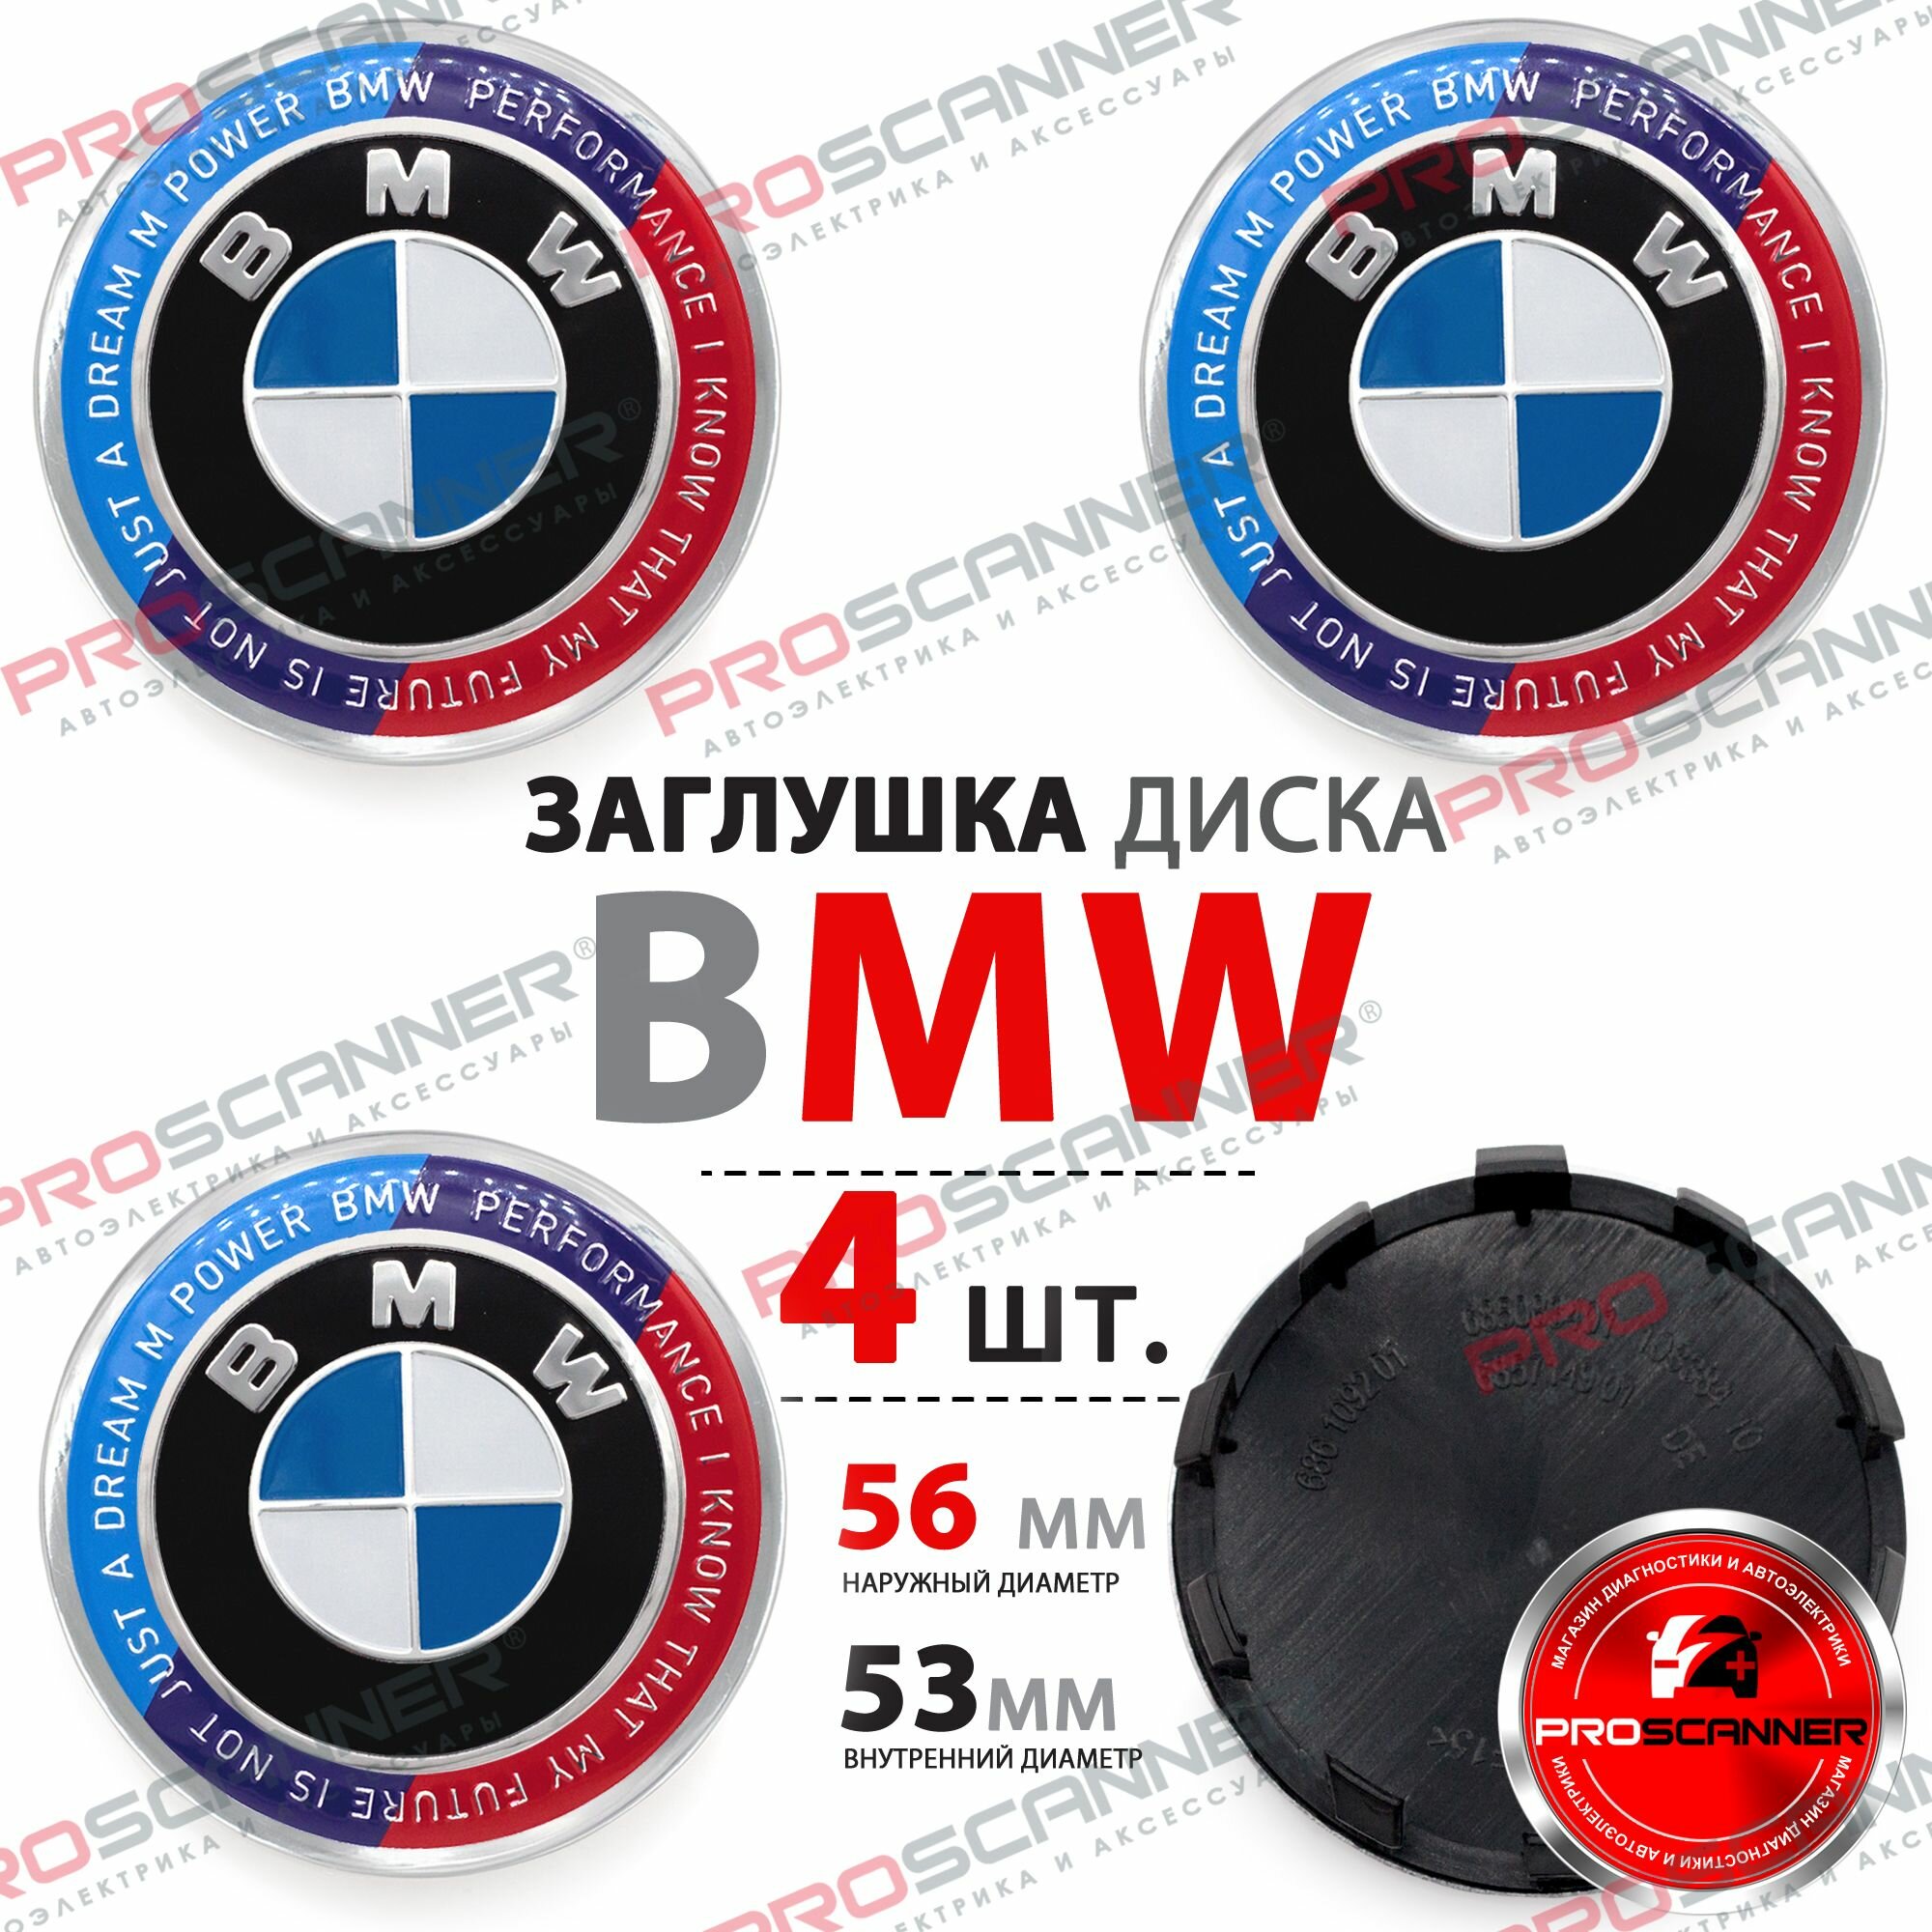 Колпачки заглушки на литые диски колес для BMW БМВ M Performance 56 мм 685083401 - 4 штуки сине-белый